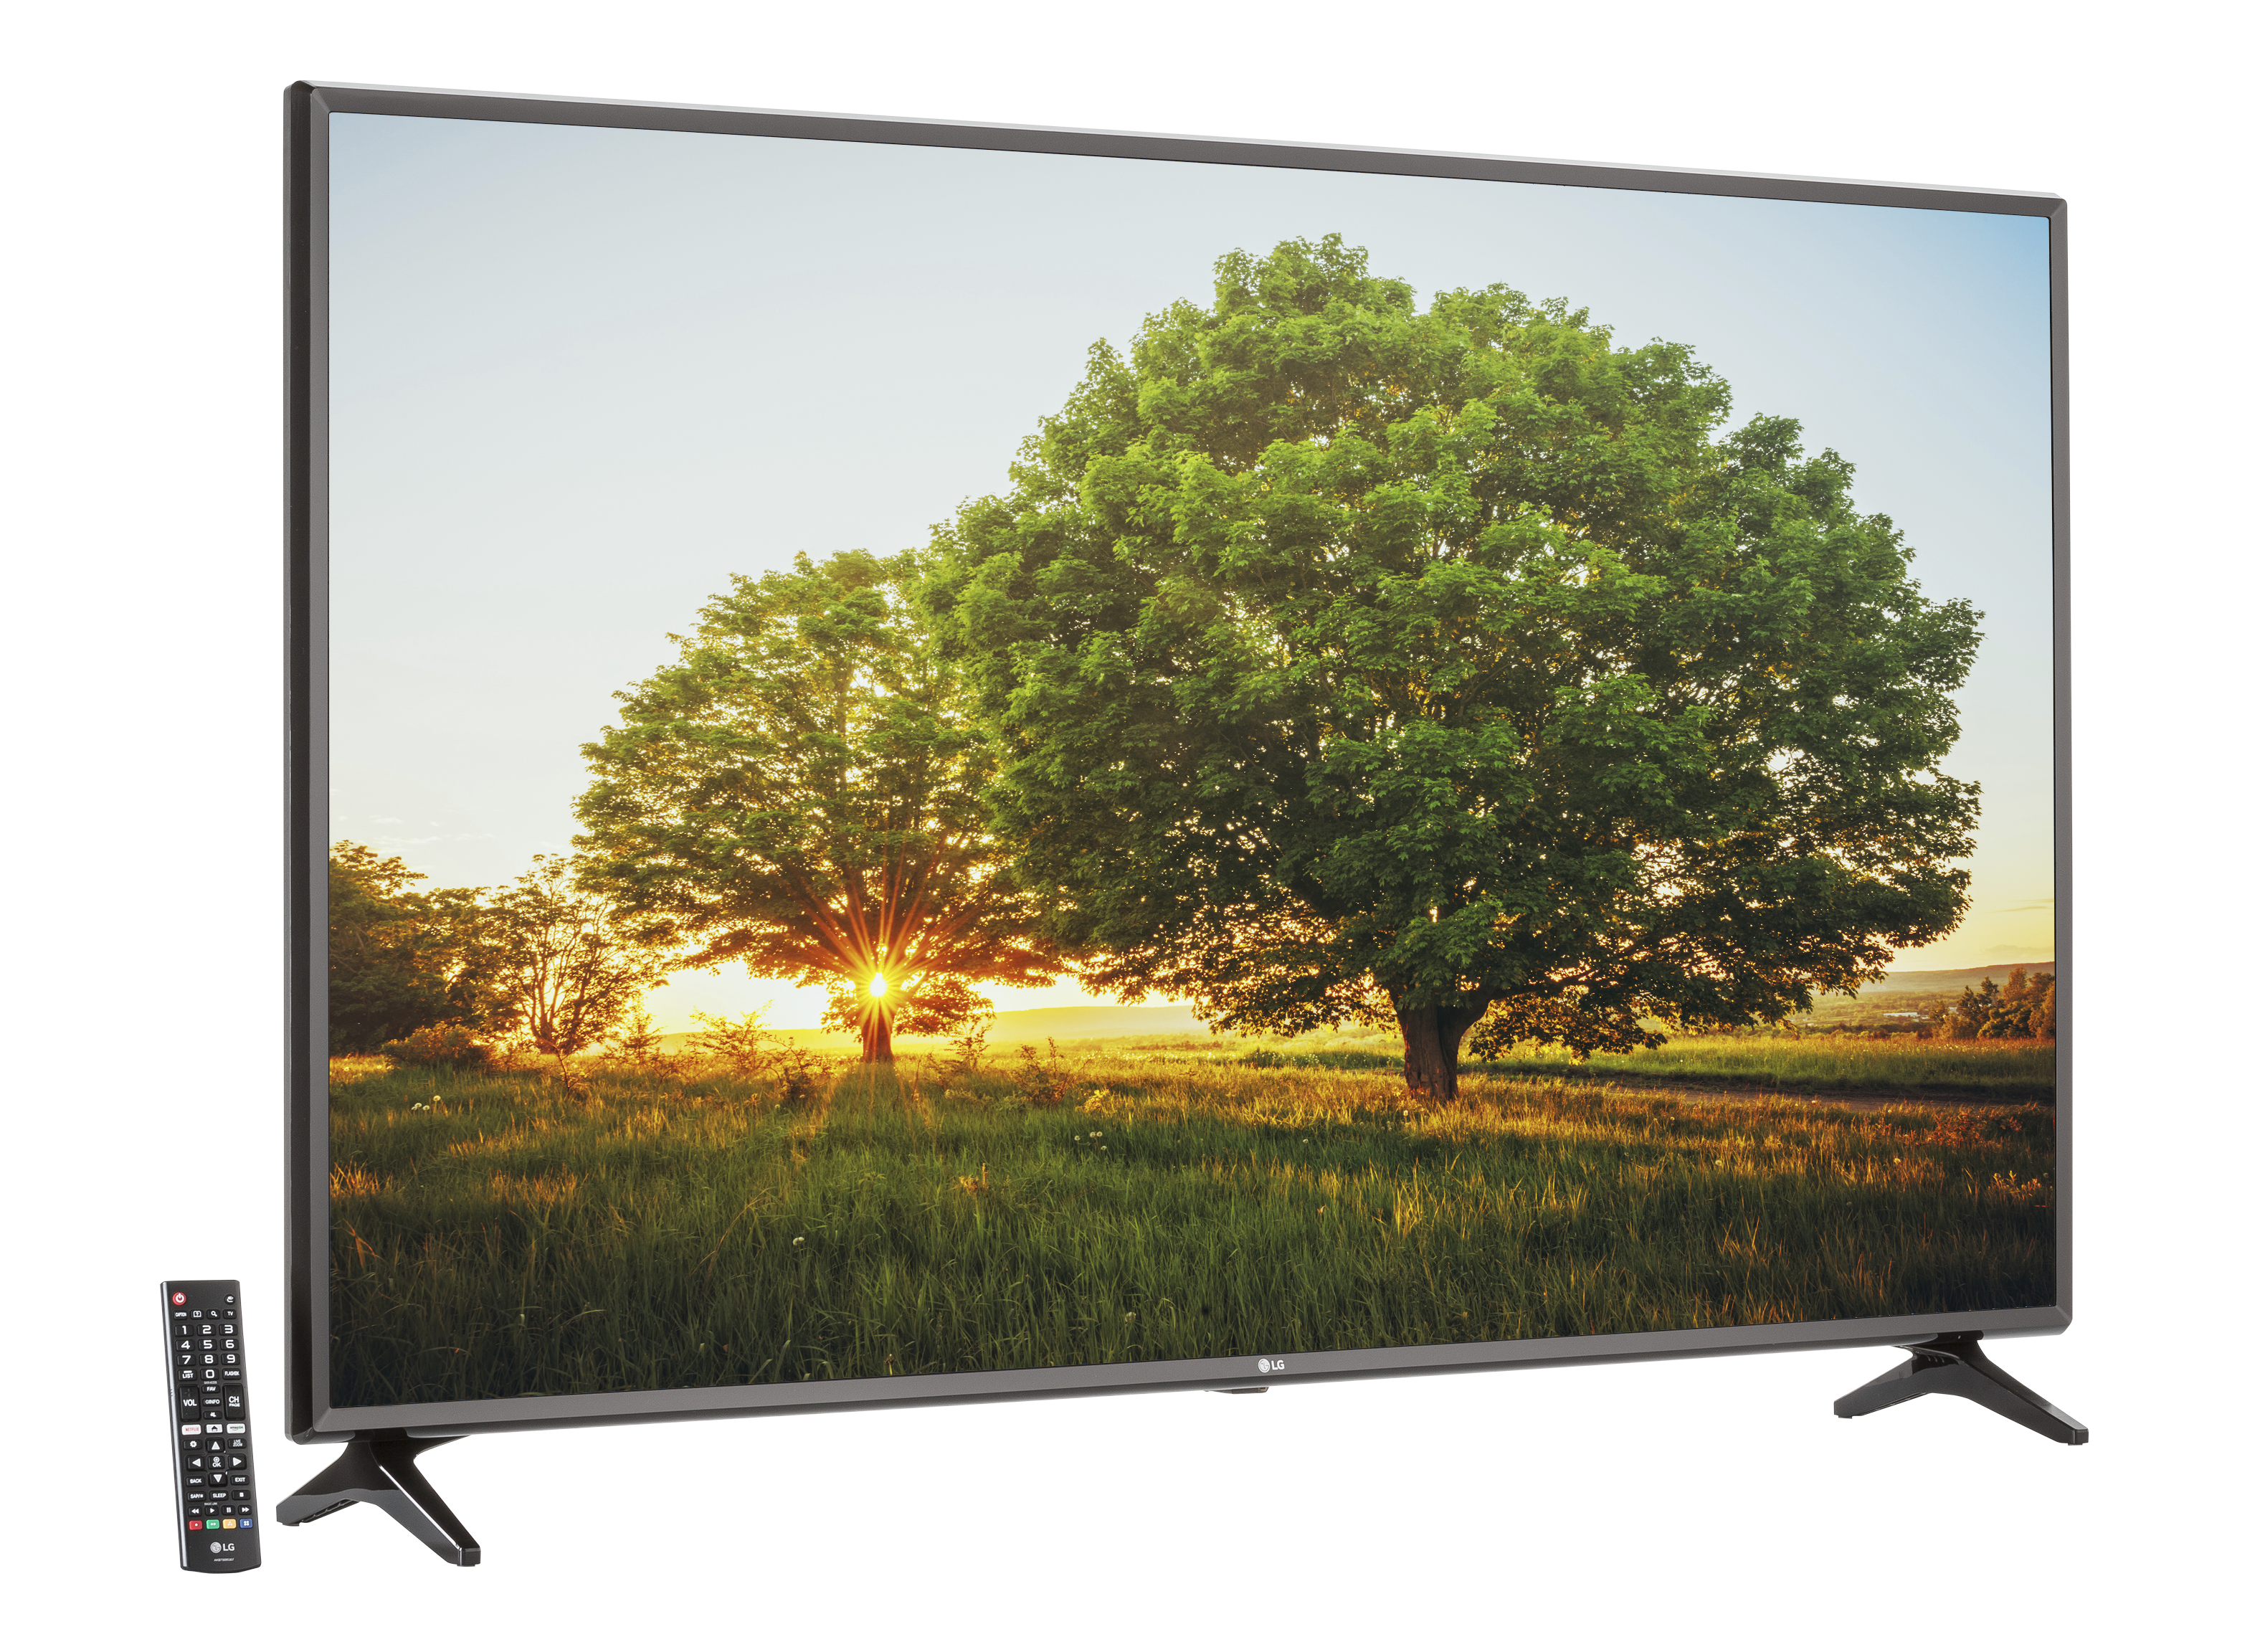 LG 60UJ6300 TV Review - Consumer Reports